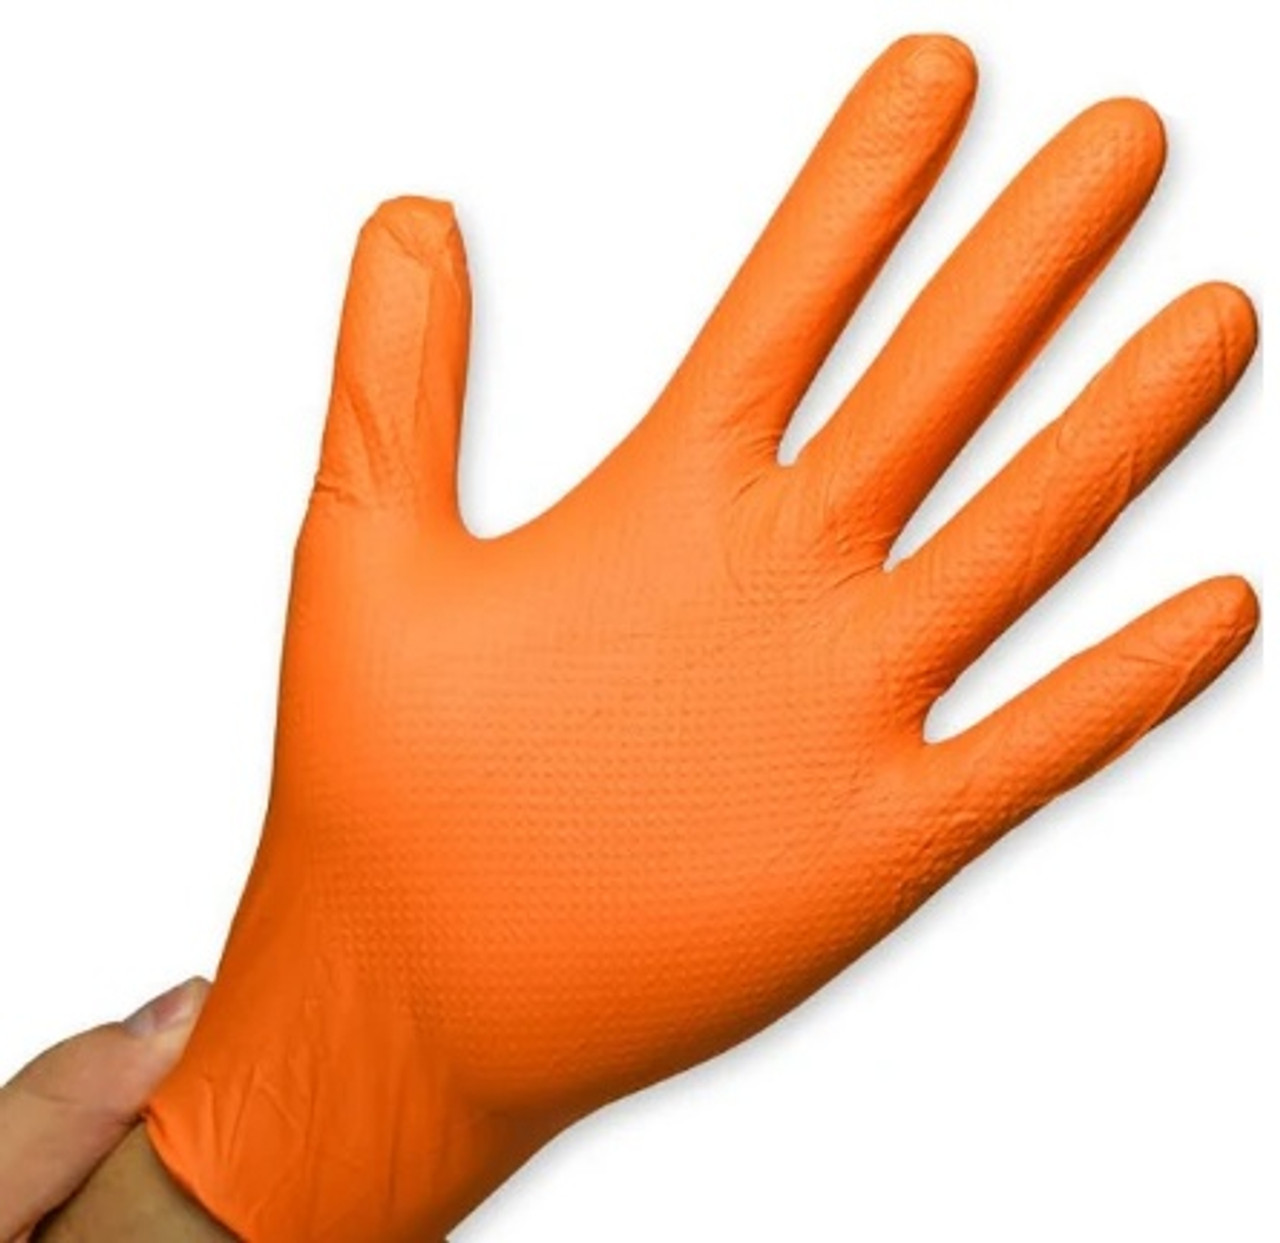 Hand Armor® Black Nitrile Geotex™ Grip Gloves 9 Mil Case Of 1000